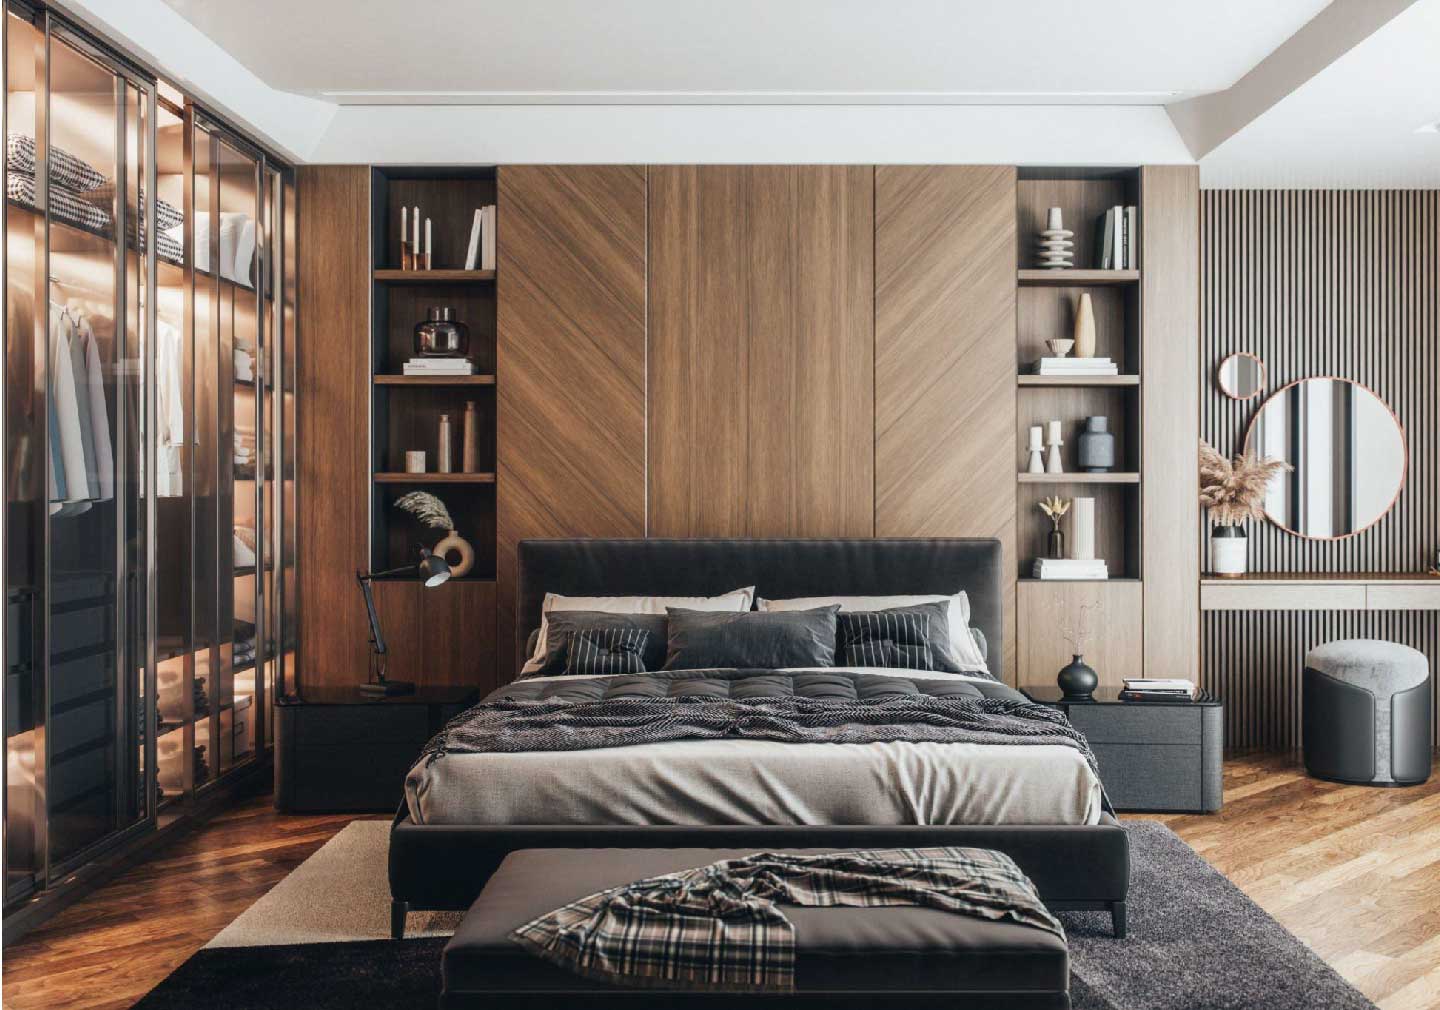 wardrobe design image with bedroom